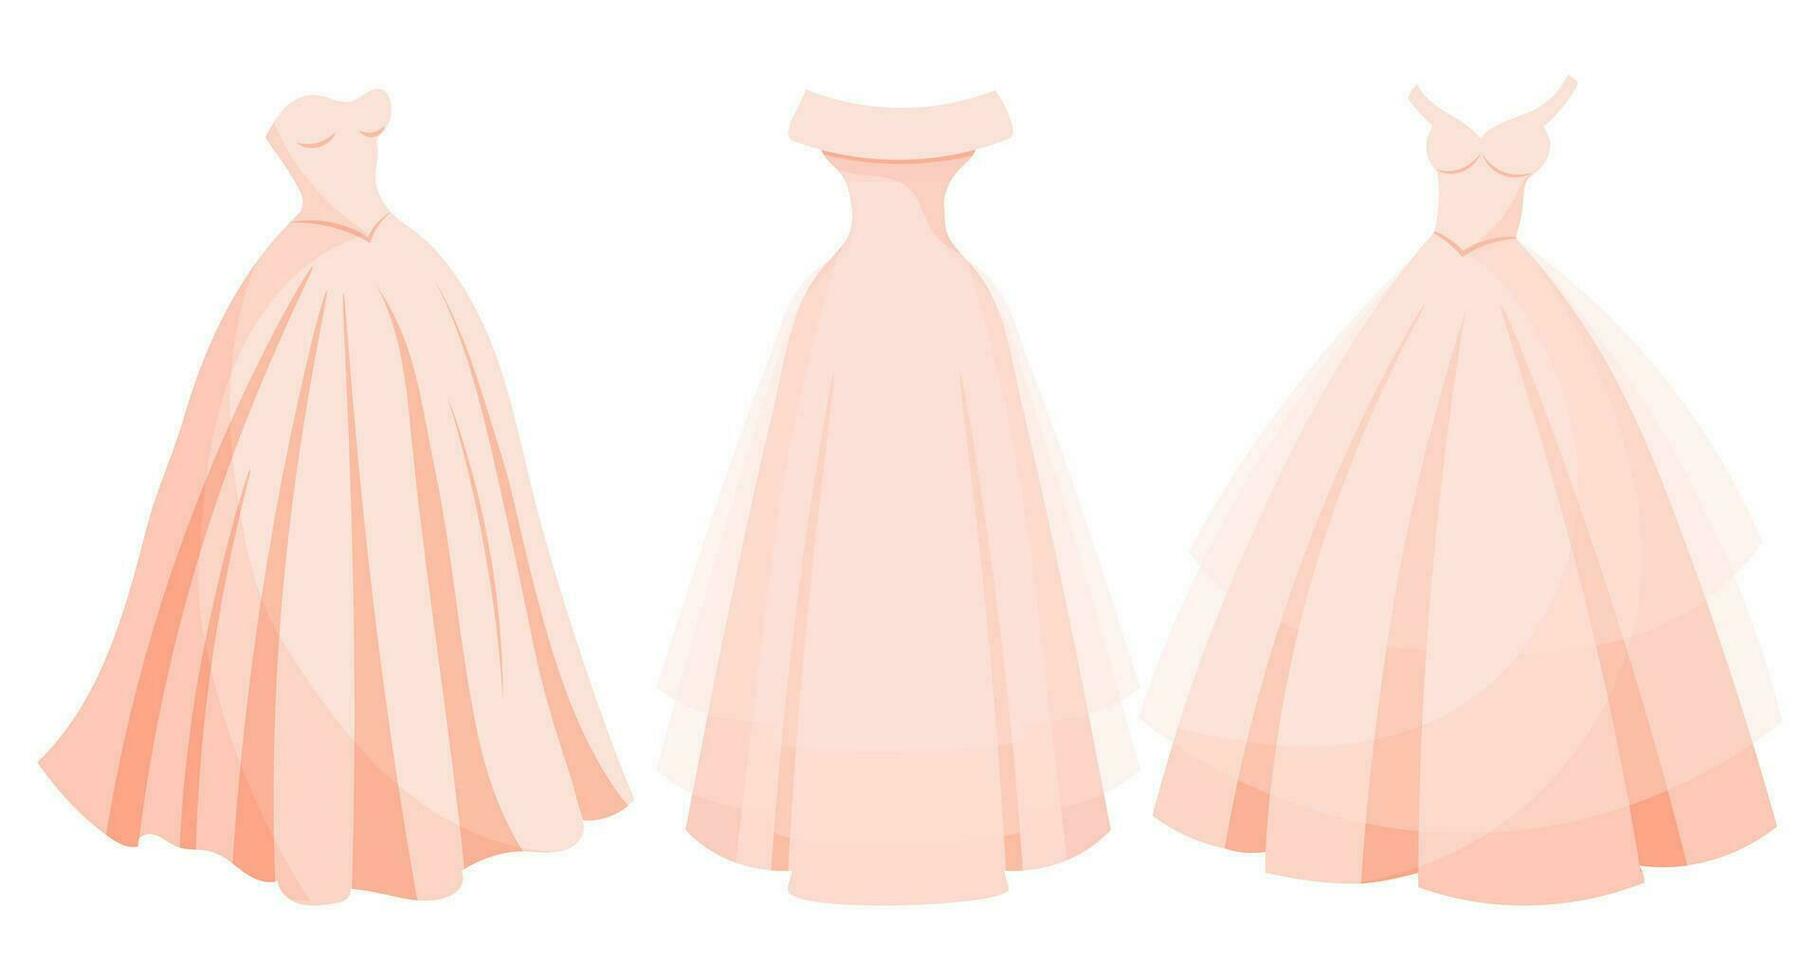 Set of luxury pink dresses, princess wedding dresses collection. Fashion. Illustration, vector